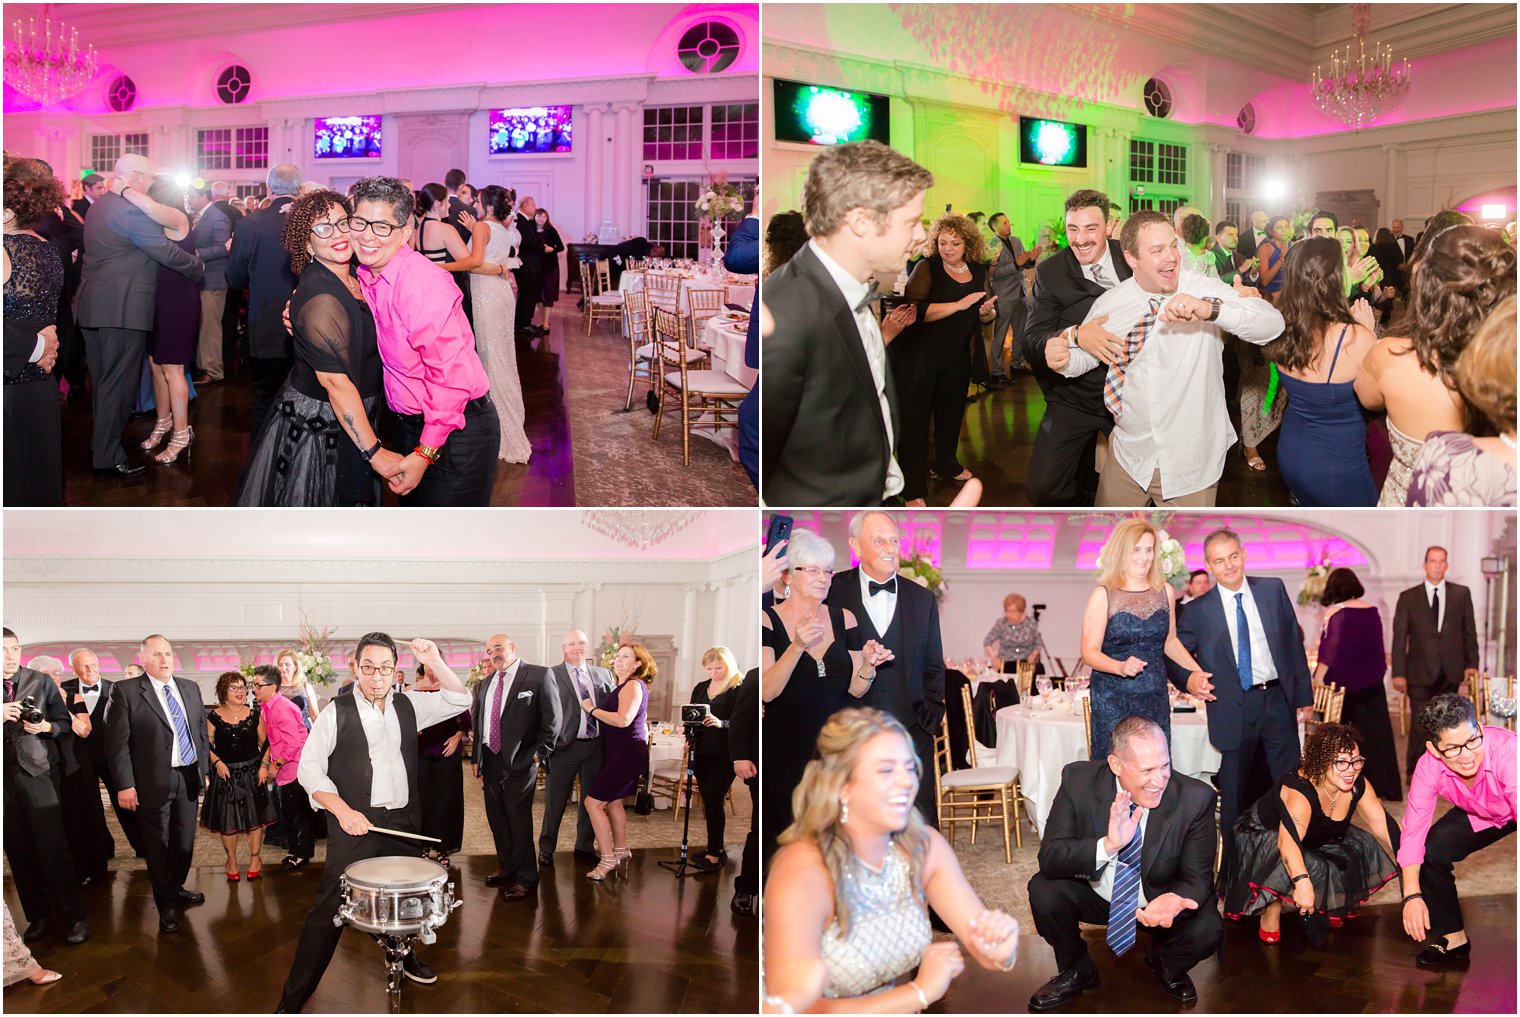 dancing at wedding reception | Park Chateau Wedding Photography